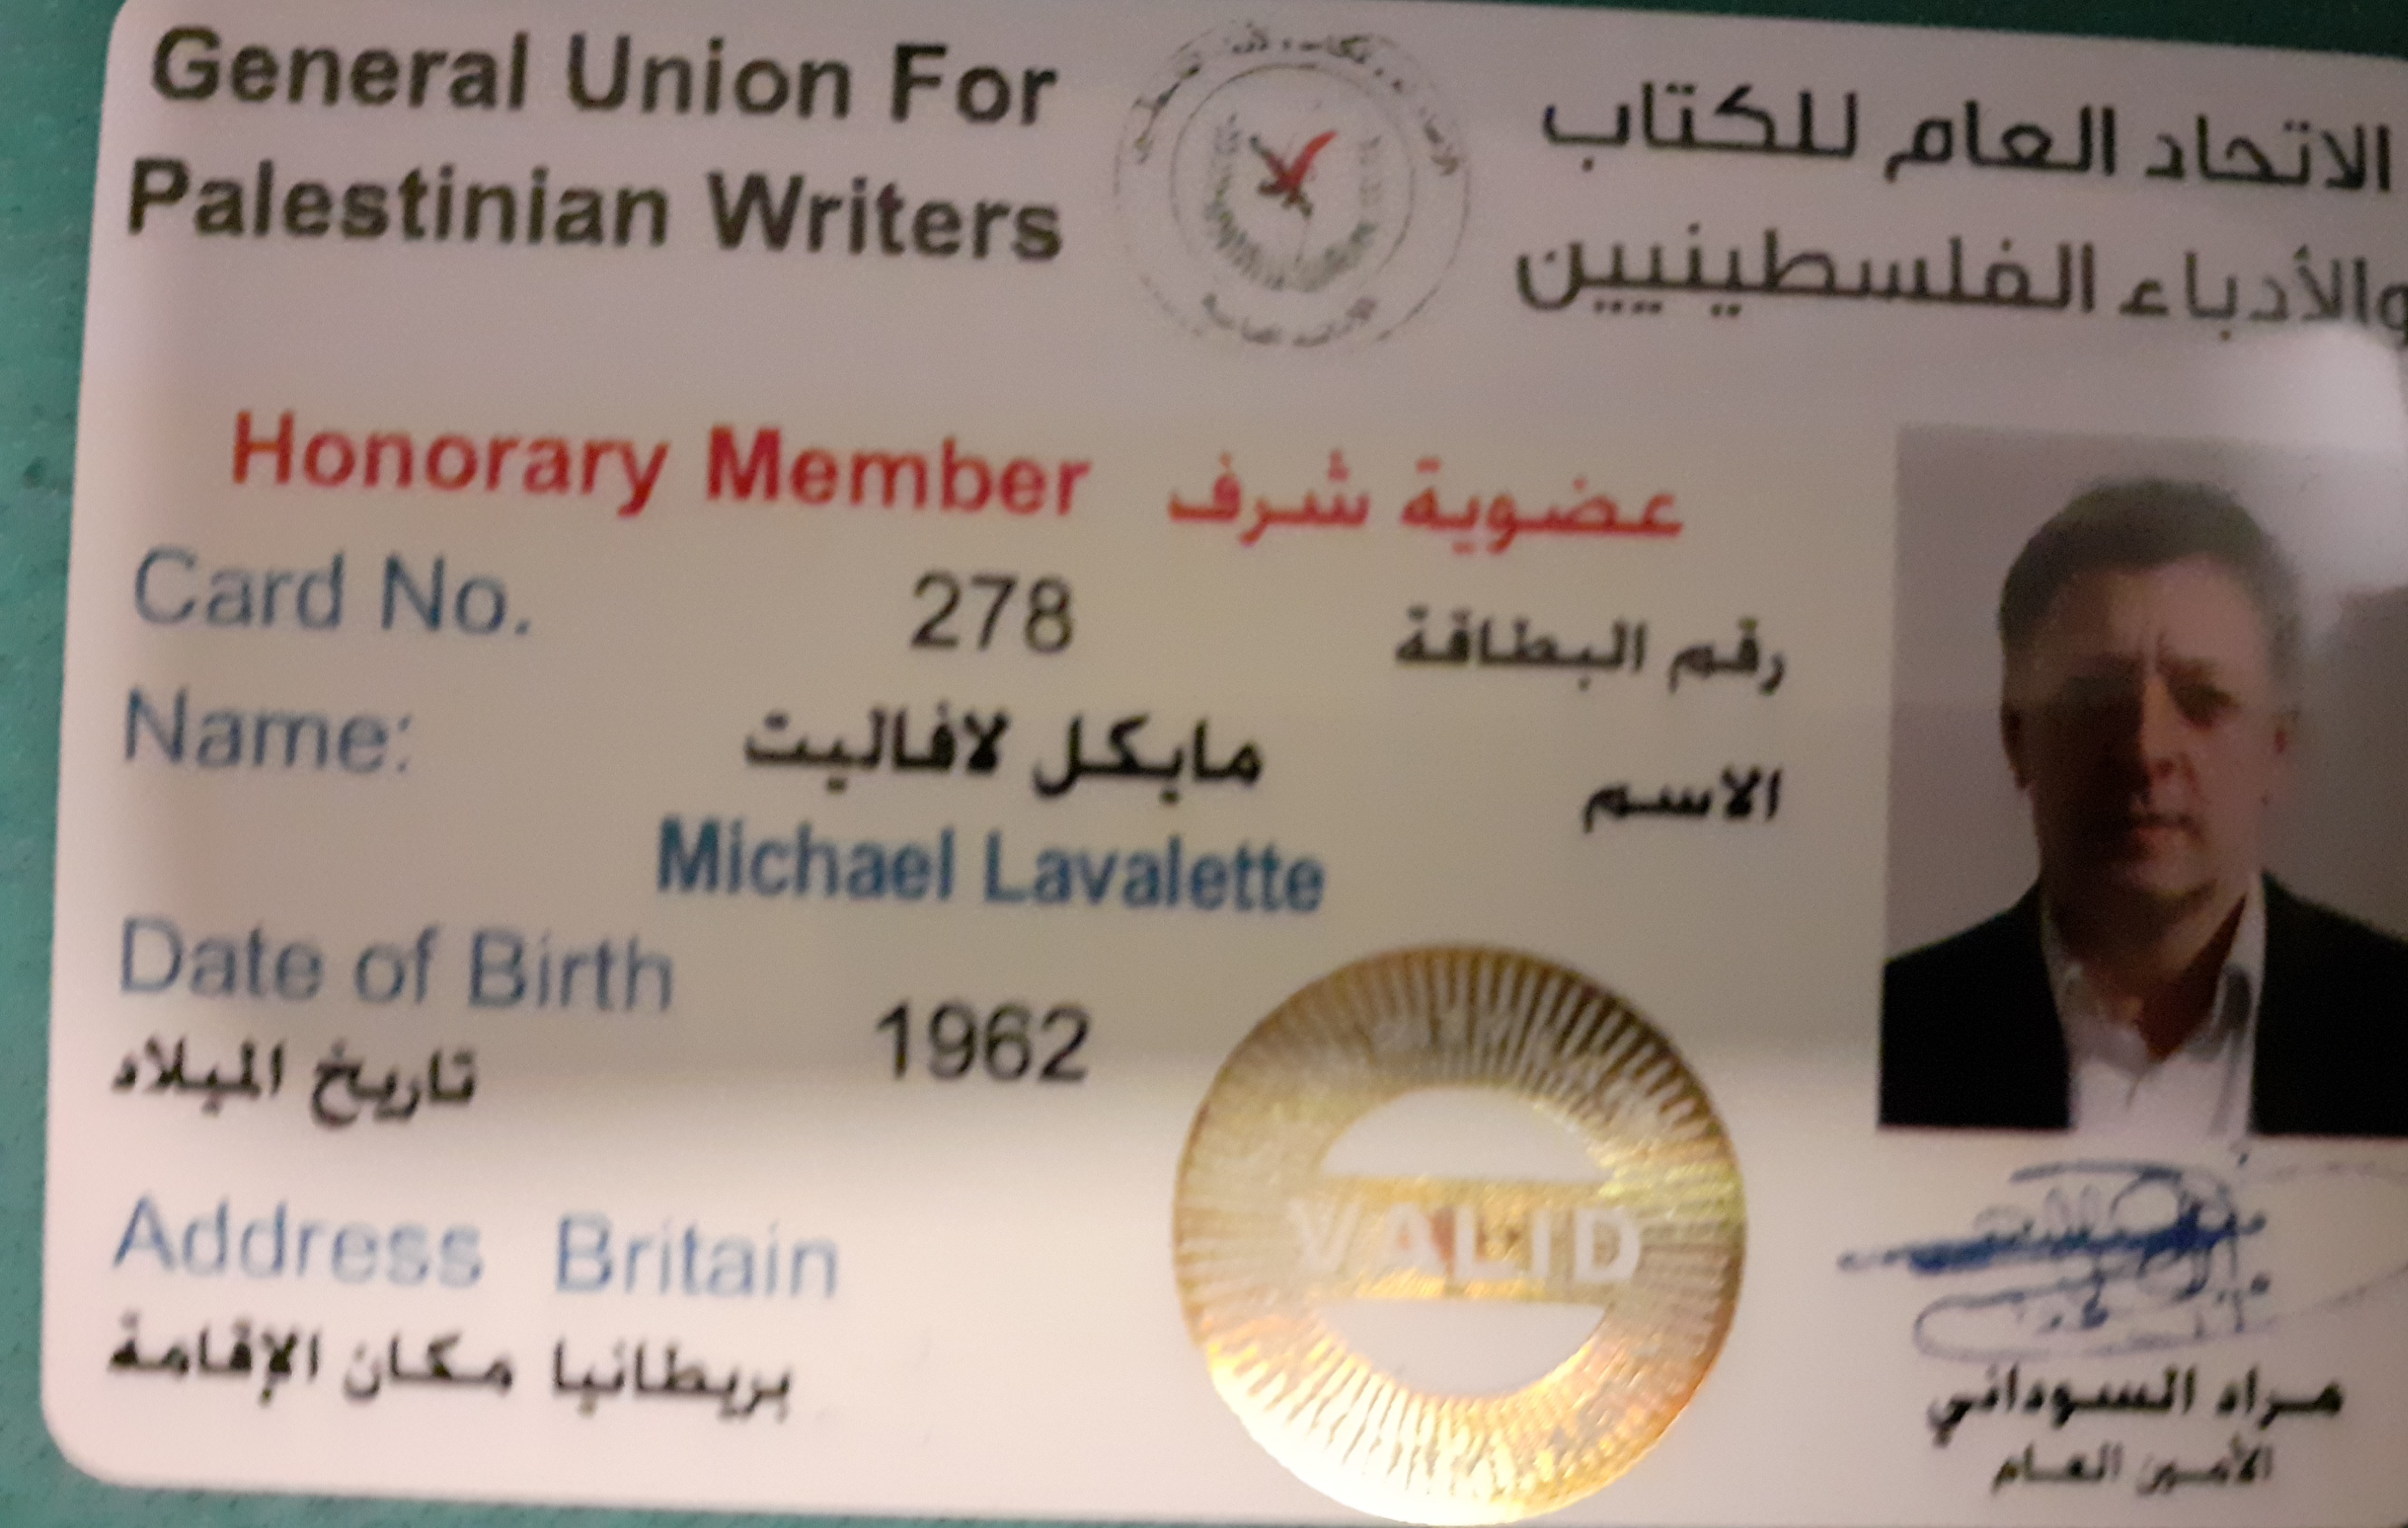 prof lavalette's honorary membership card